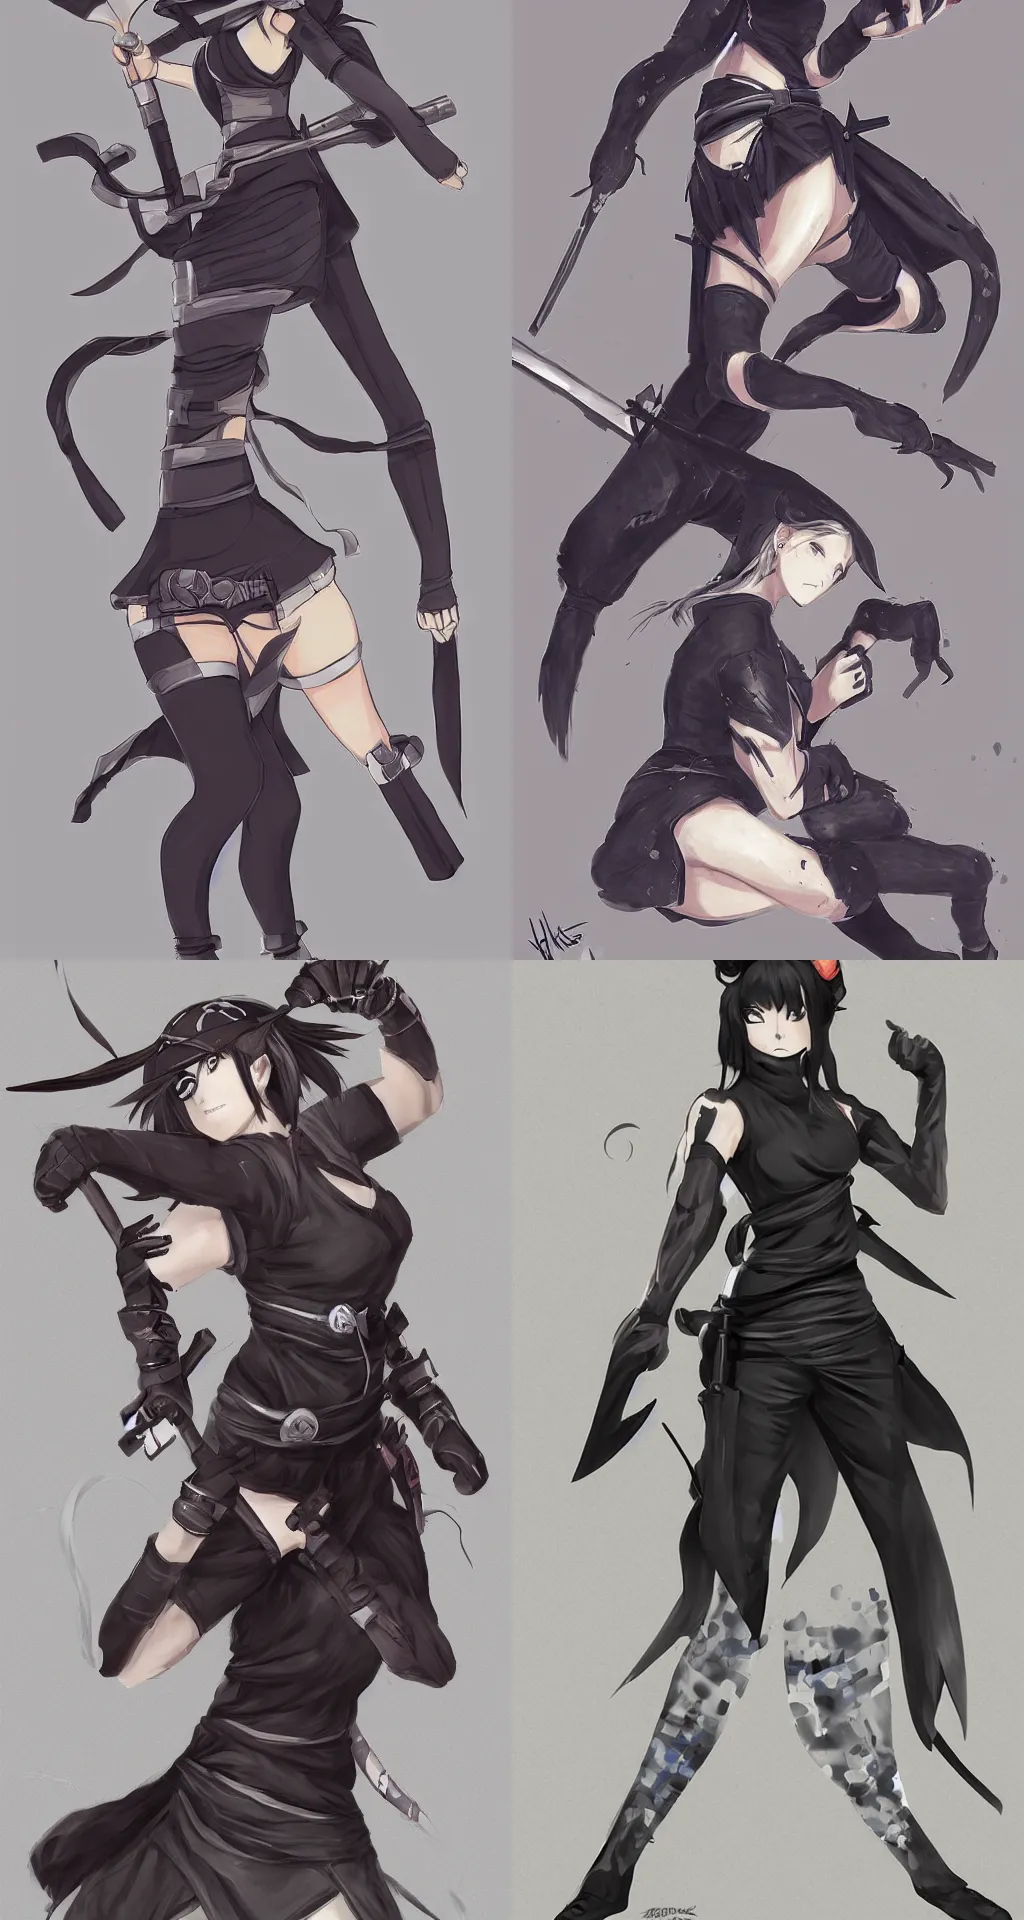 Prompt: Anime ninja girl by Huke, concept art